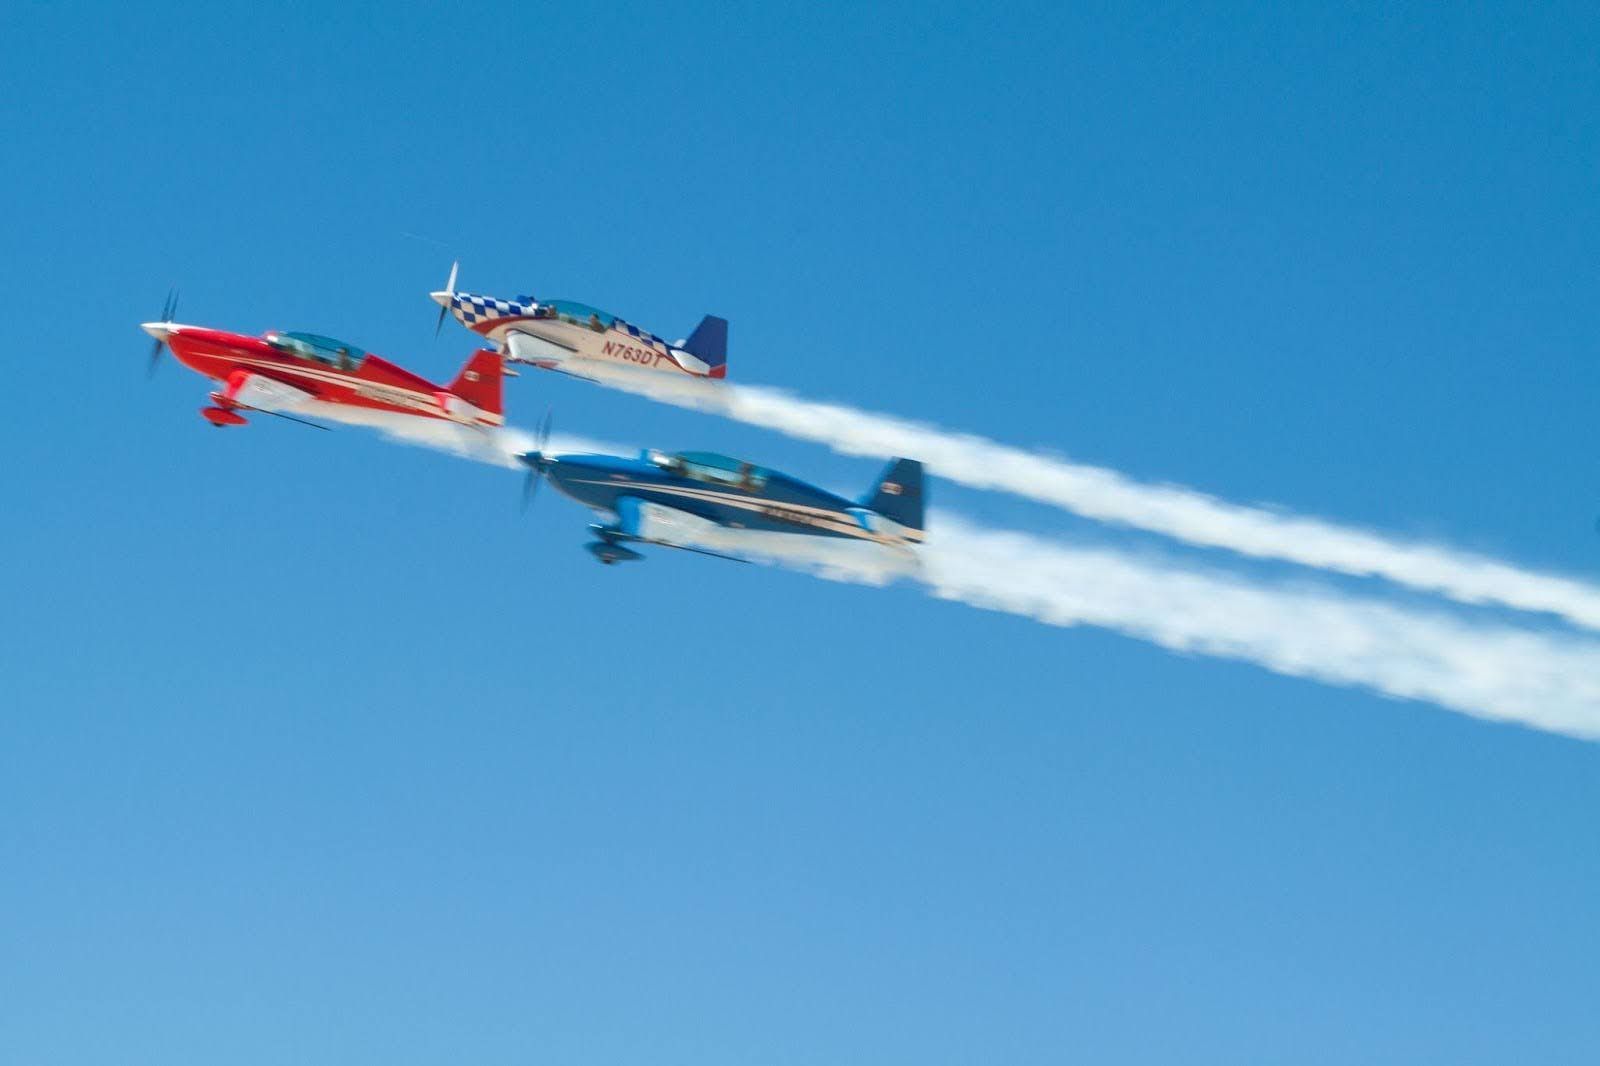 Three stunt planes flying together